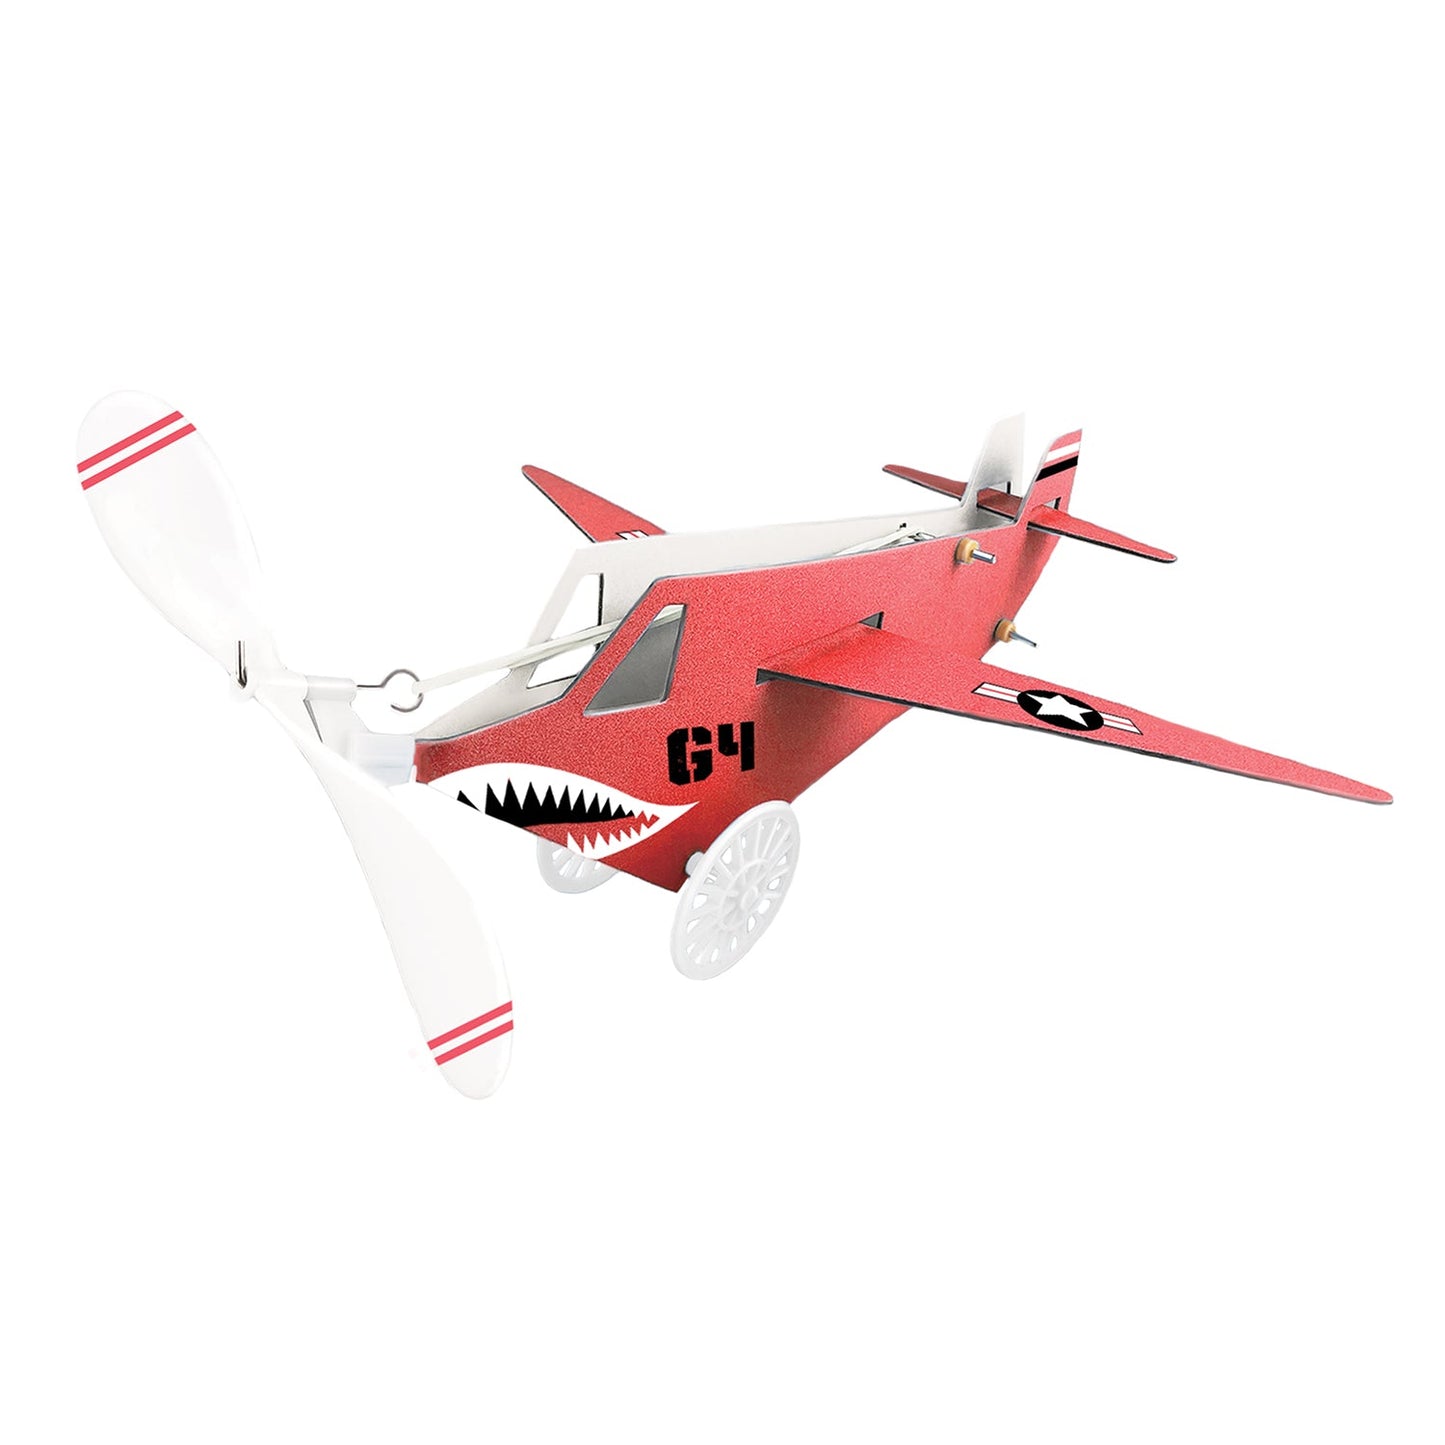 DIY puzzle build a shark mouth plane kit